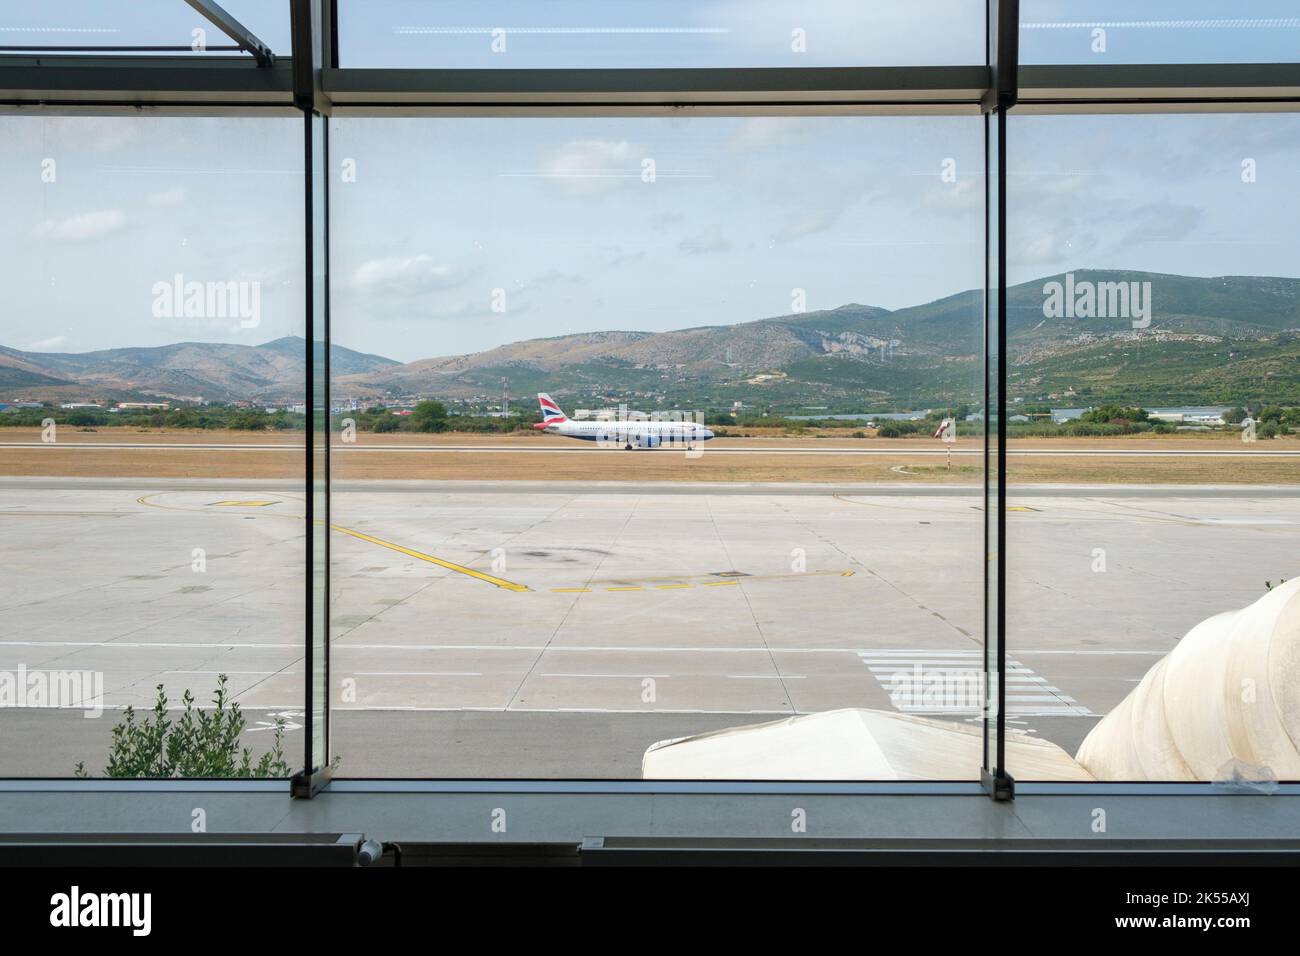 A British Airways passenger jet lands at Split airport in Croatia. Stock Photo